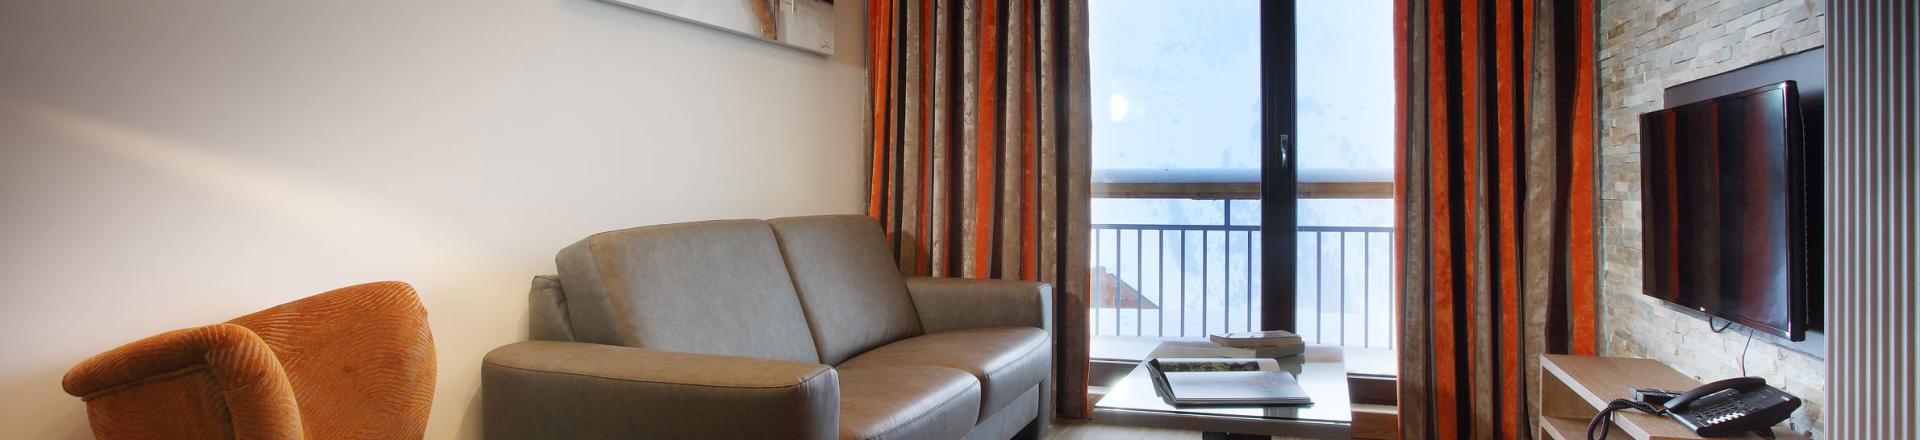 Rent in ski resort Résidence Chalet des Neiges la Source des Arcs - Les Arcs - Living room